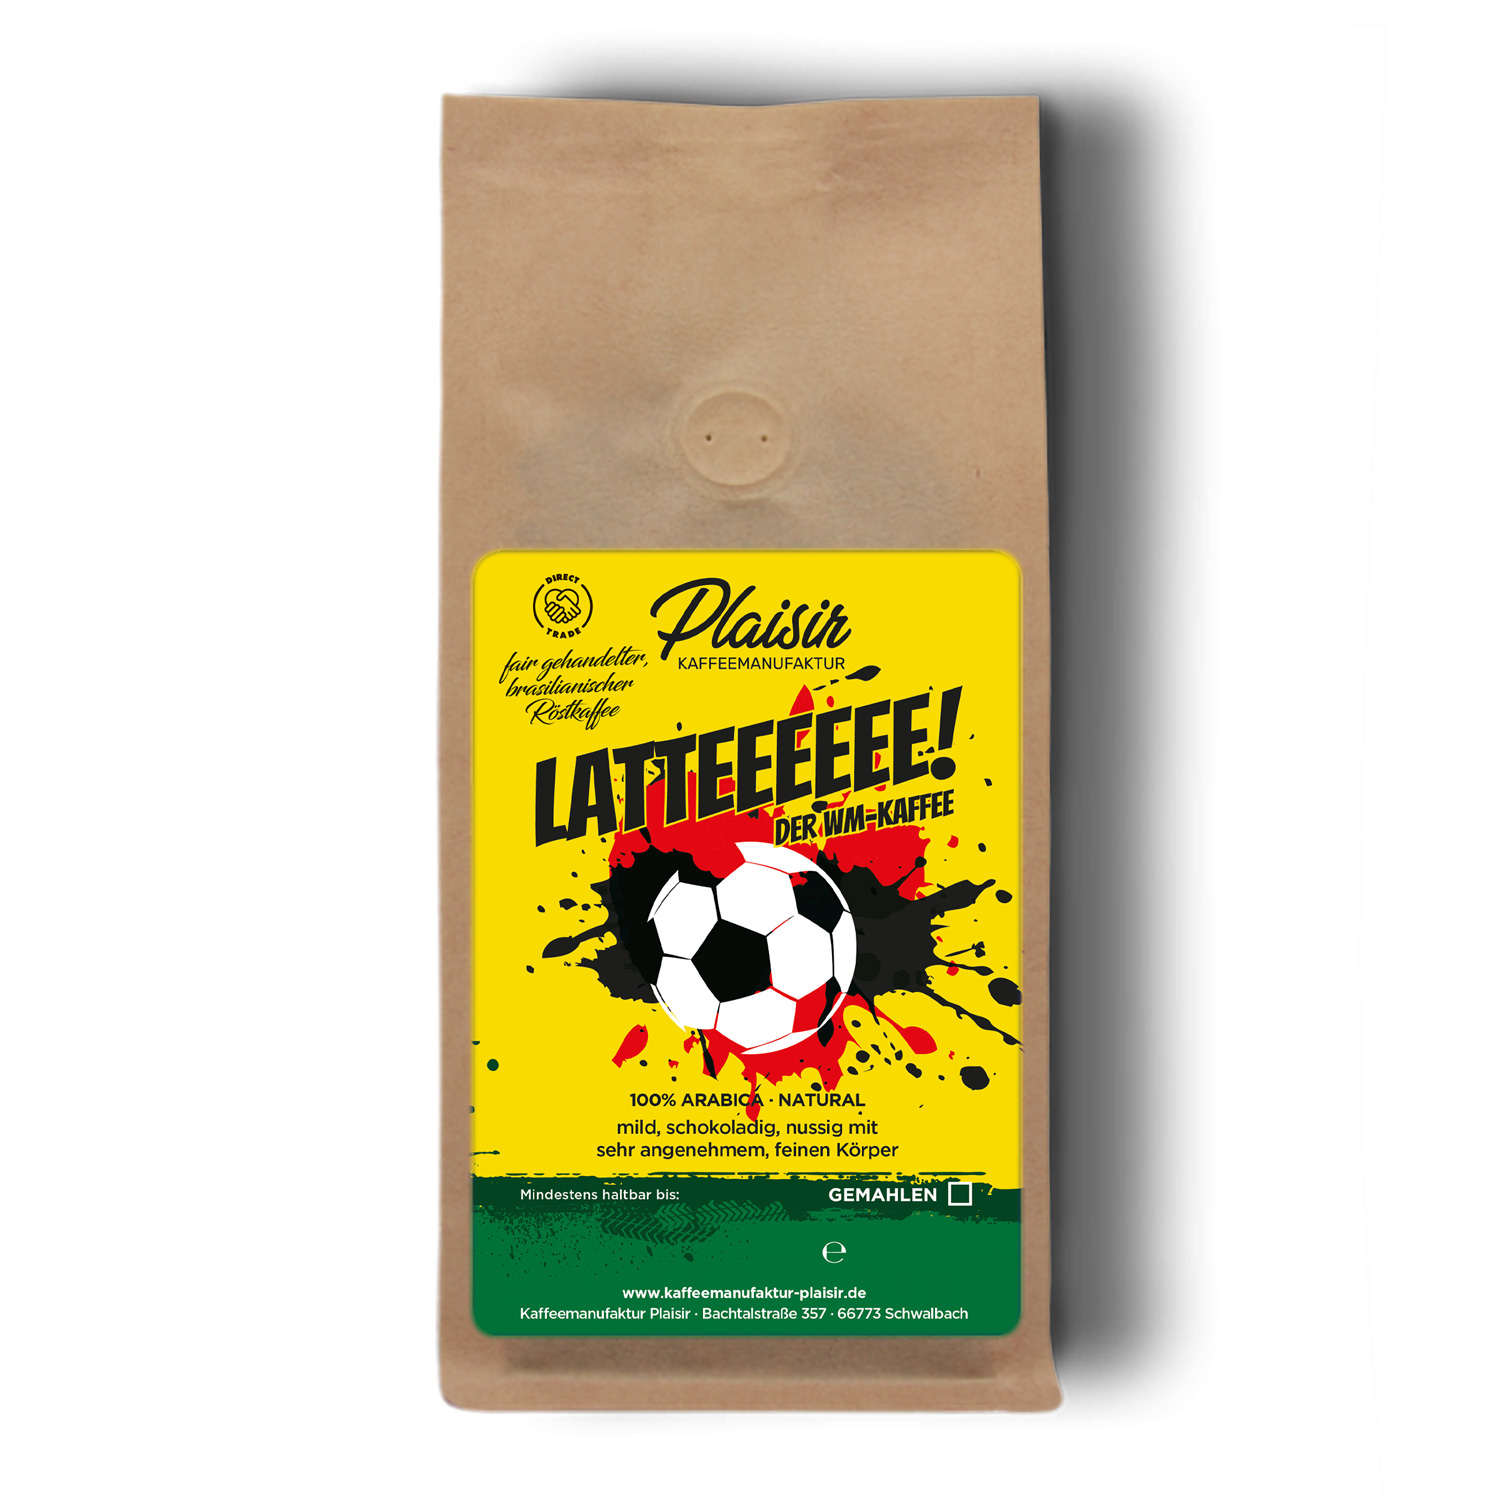 LATTEEEEEE – der WM-Kaffee!